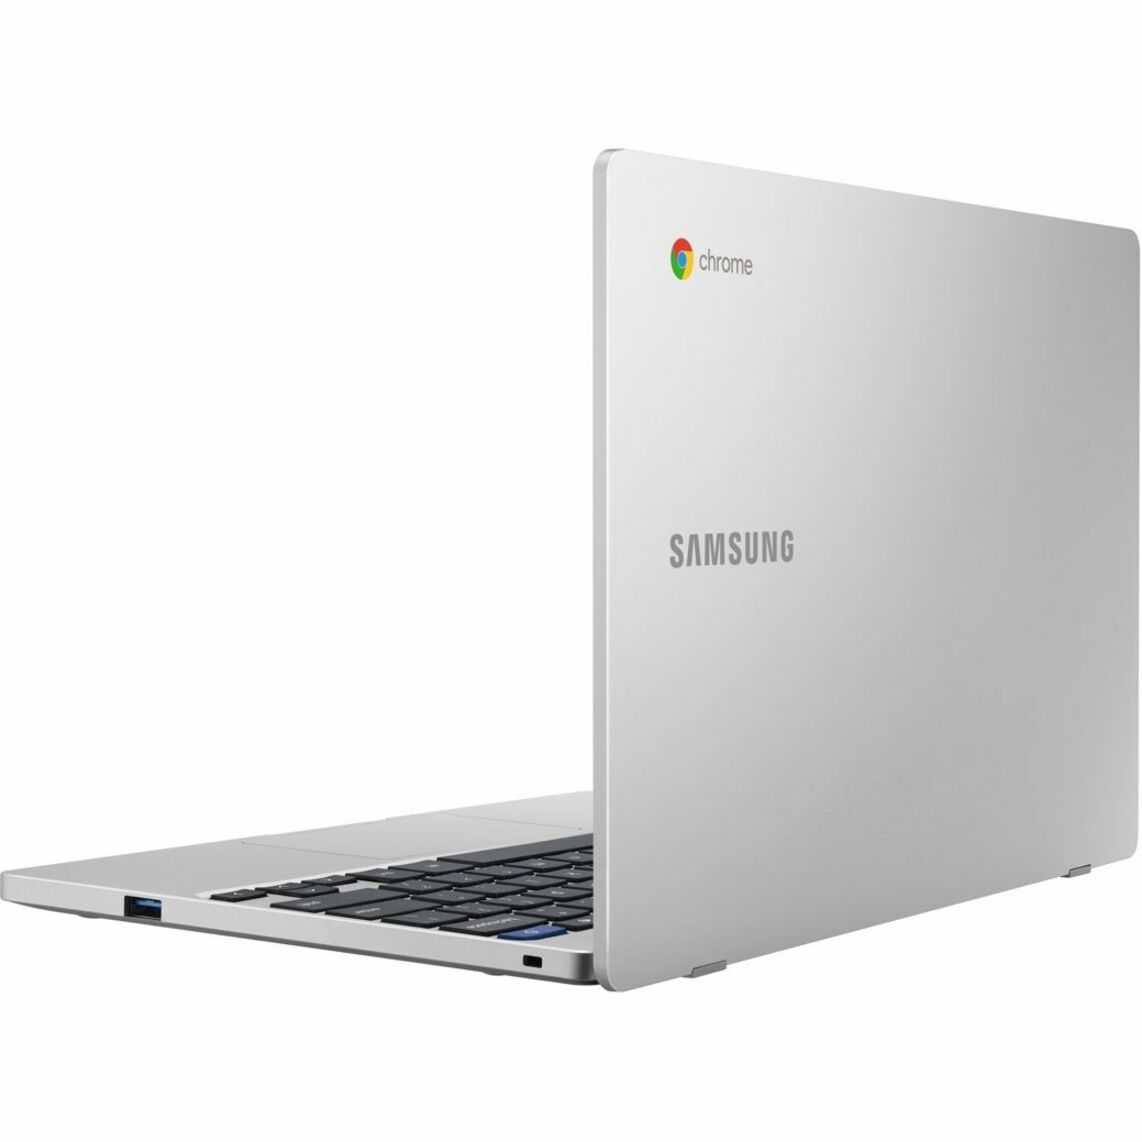 Samsung XE310XBA-KA2US Chromebook 4 - 11.6 Intel UHD, Intel Celeron N4020, 4GB RAM, 64GB Storage, Chrome OS